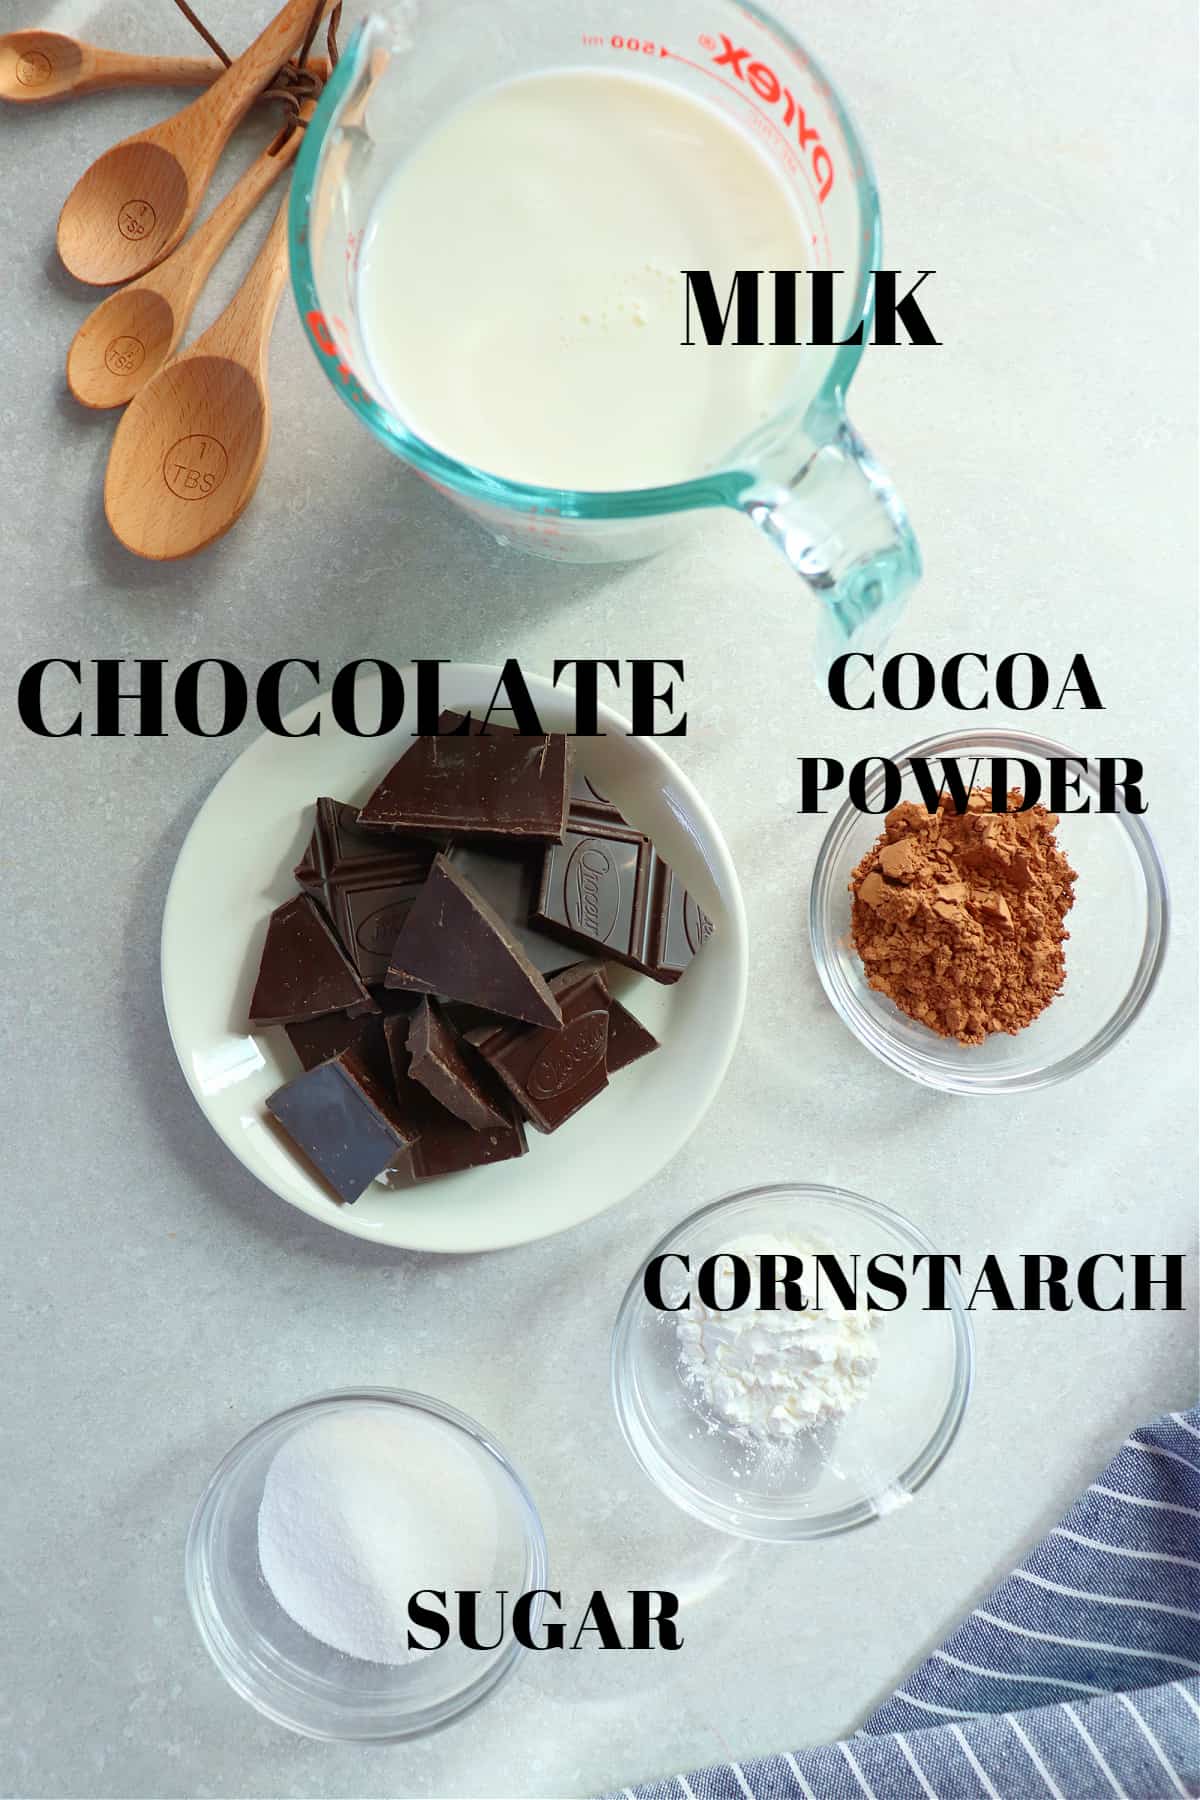 Chocolate, cocoa powder, sugar, cornstarch and milk in glass bowls on a gray background.